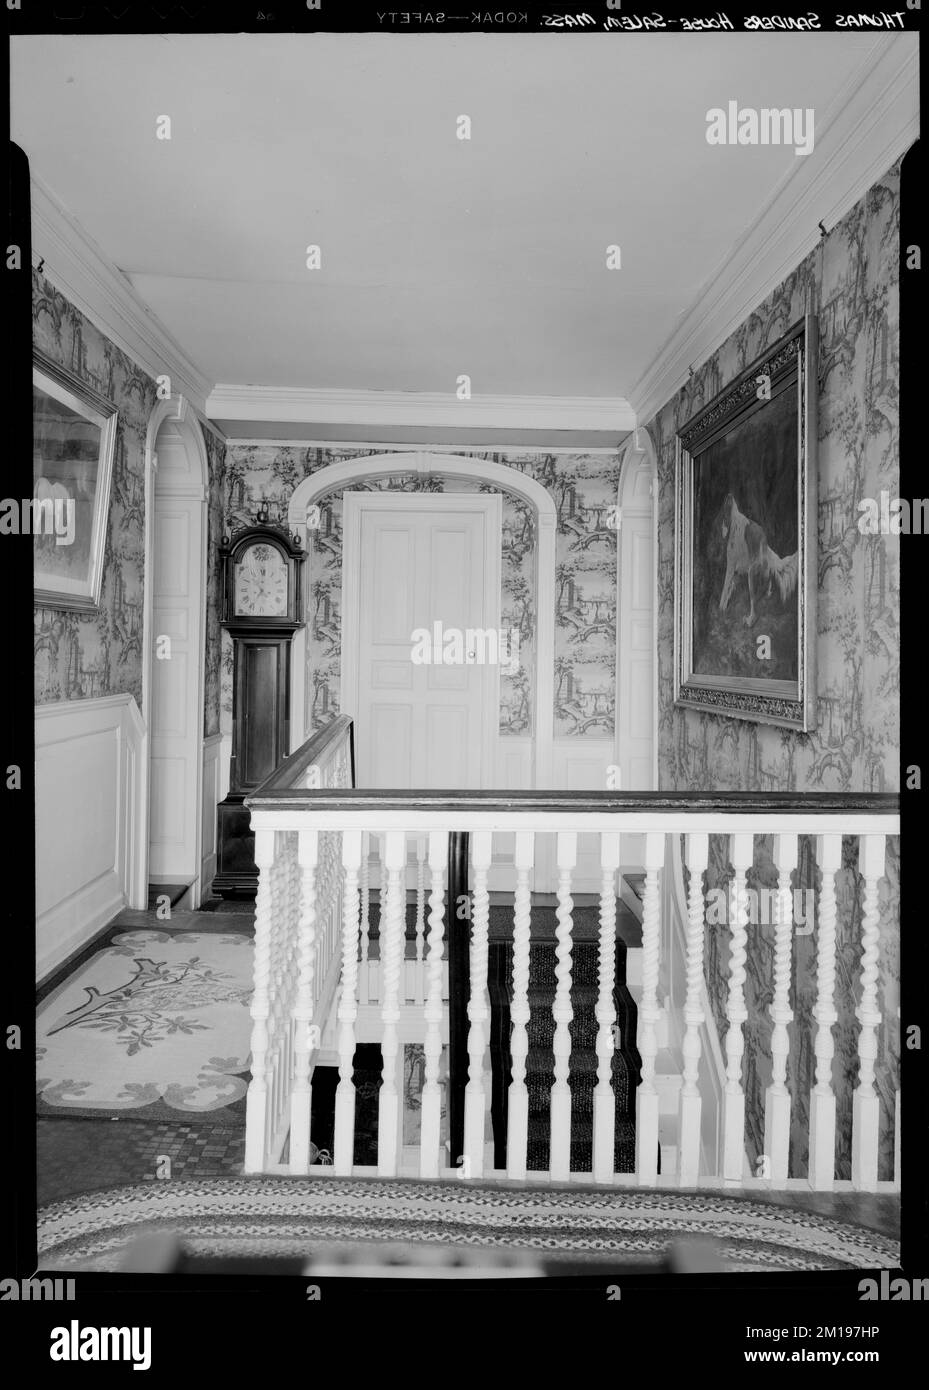 Thomas Sanders House, upstairs hallway, Salem, MA, interior , Interiors, Balusters. Samuel Chamberlain Photograph Negatives Collection Stock Photo